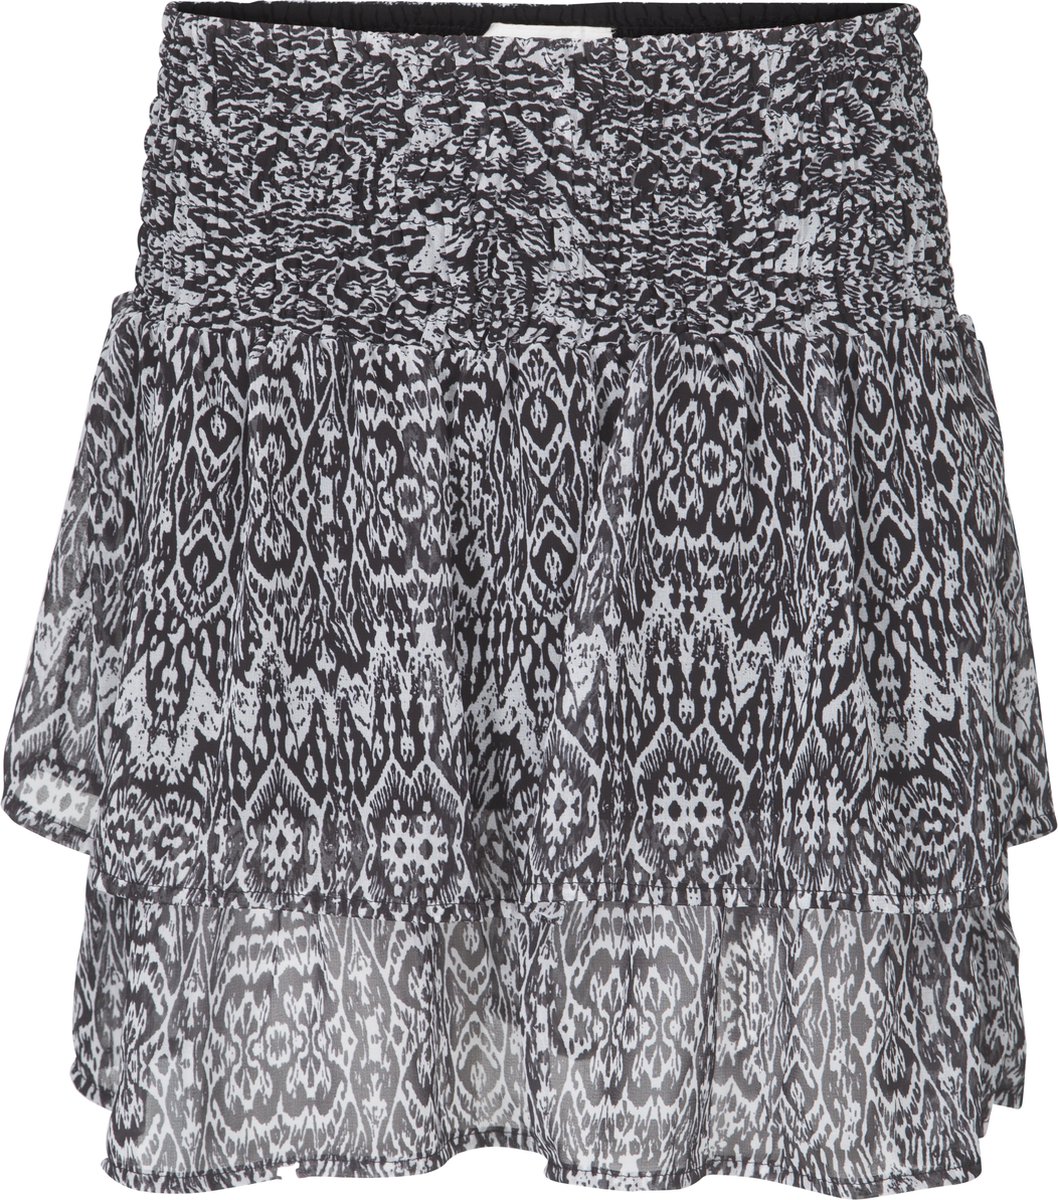 Les Icônes - Elegance Skirt - Rok - Zwart - Dessin - 36/38